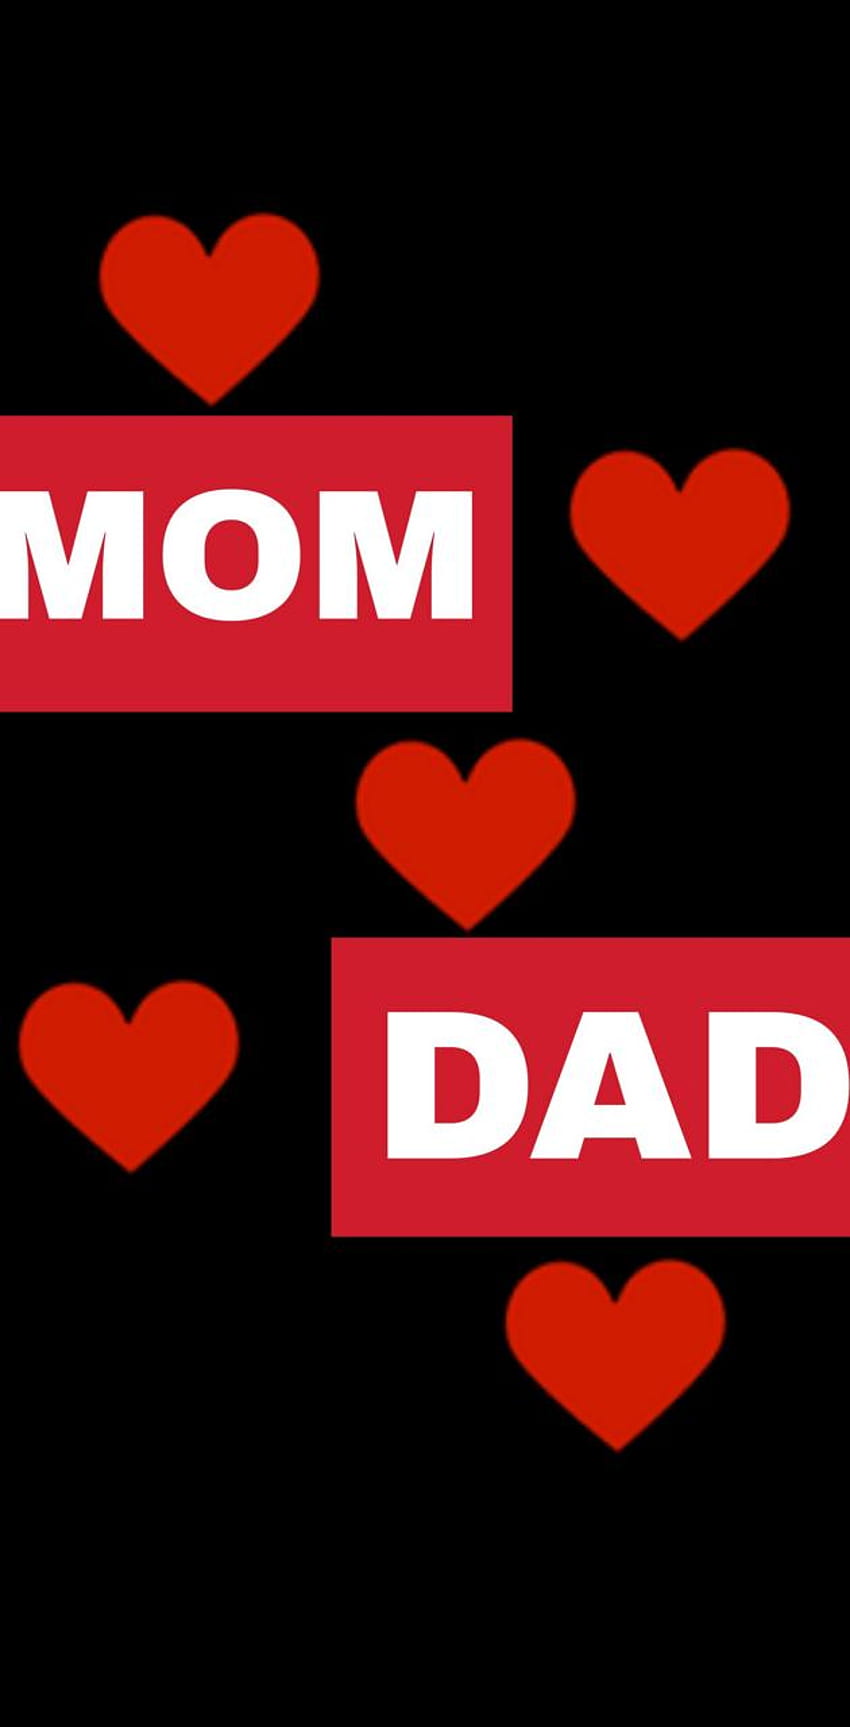 Love Mom Dad autorstwa uzairahmad343, czarnej mamy i taty Tapeta na telefon HD